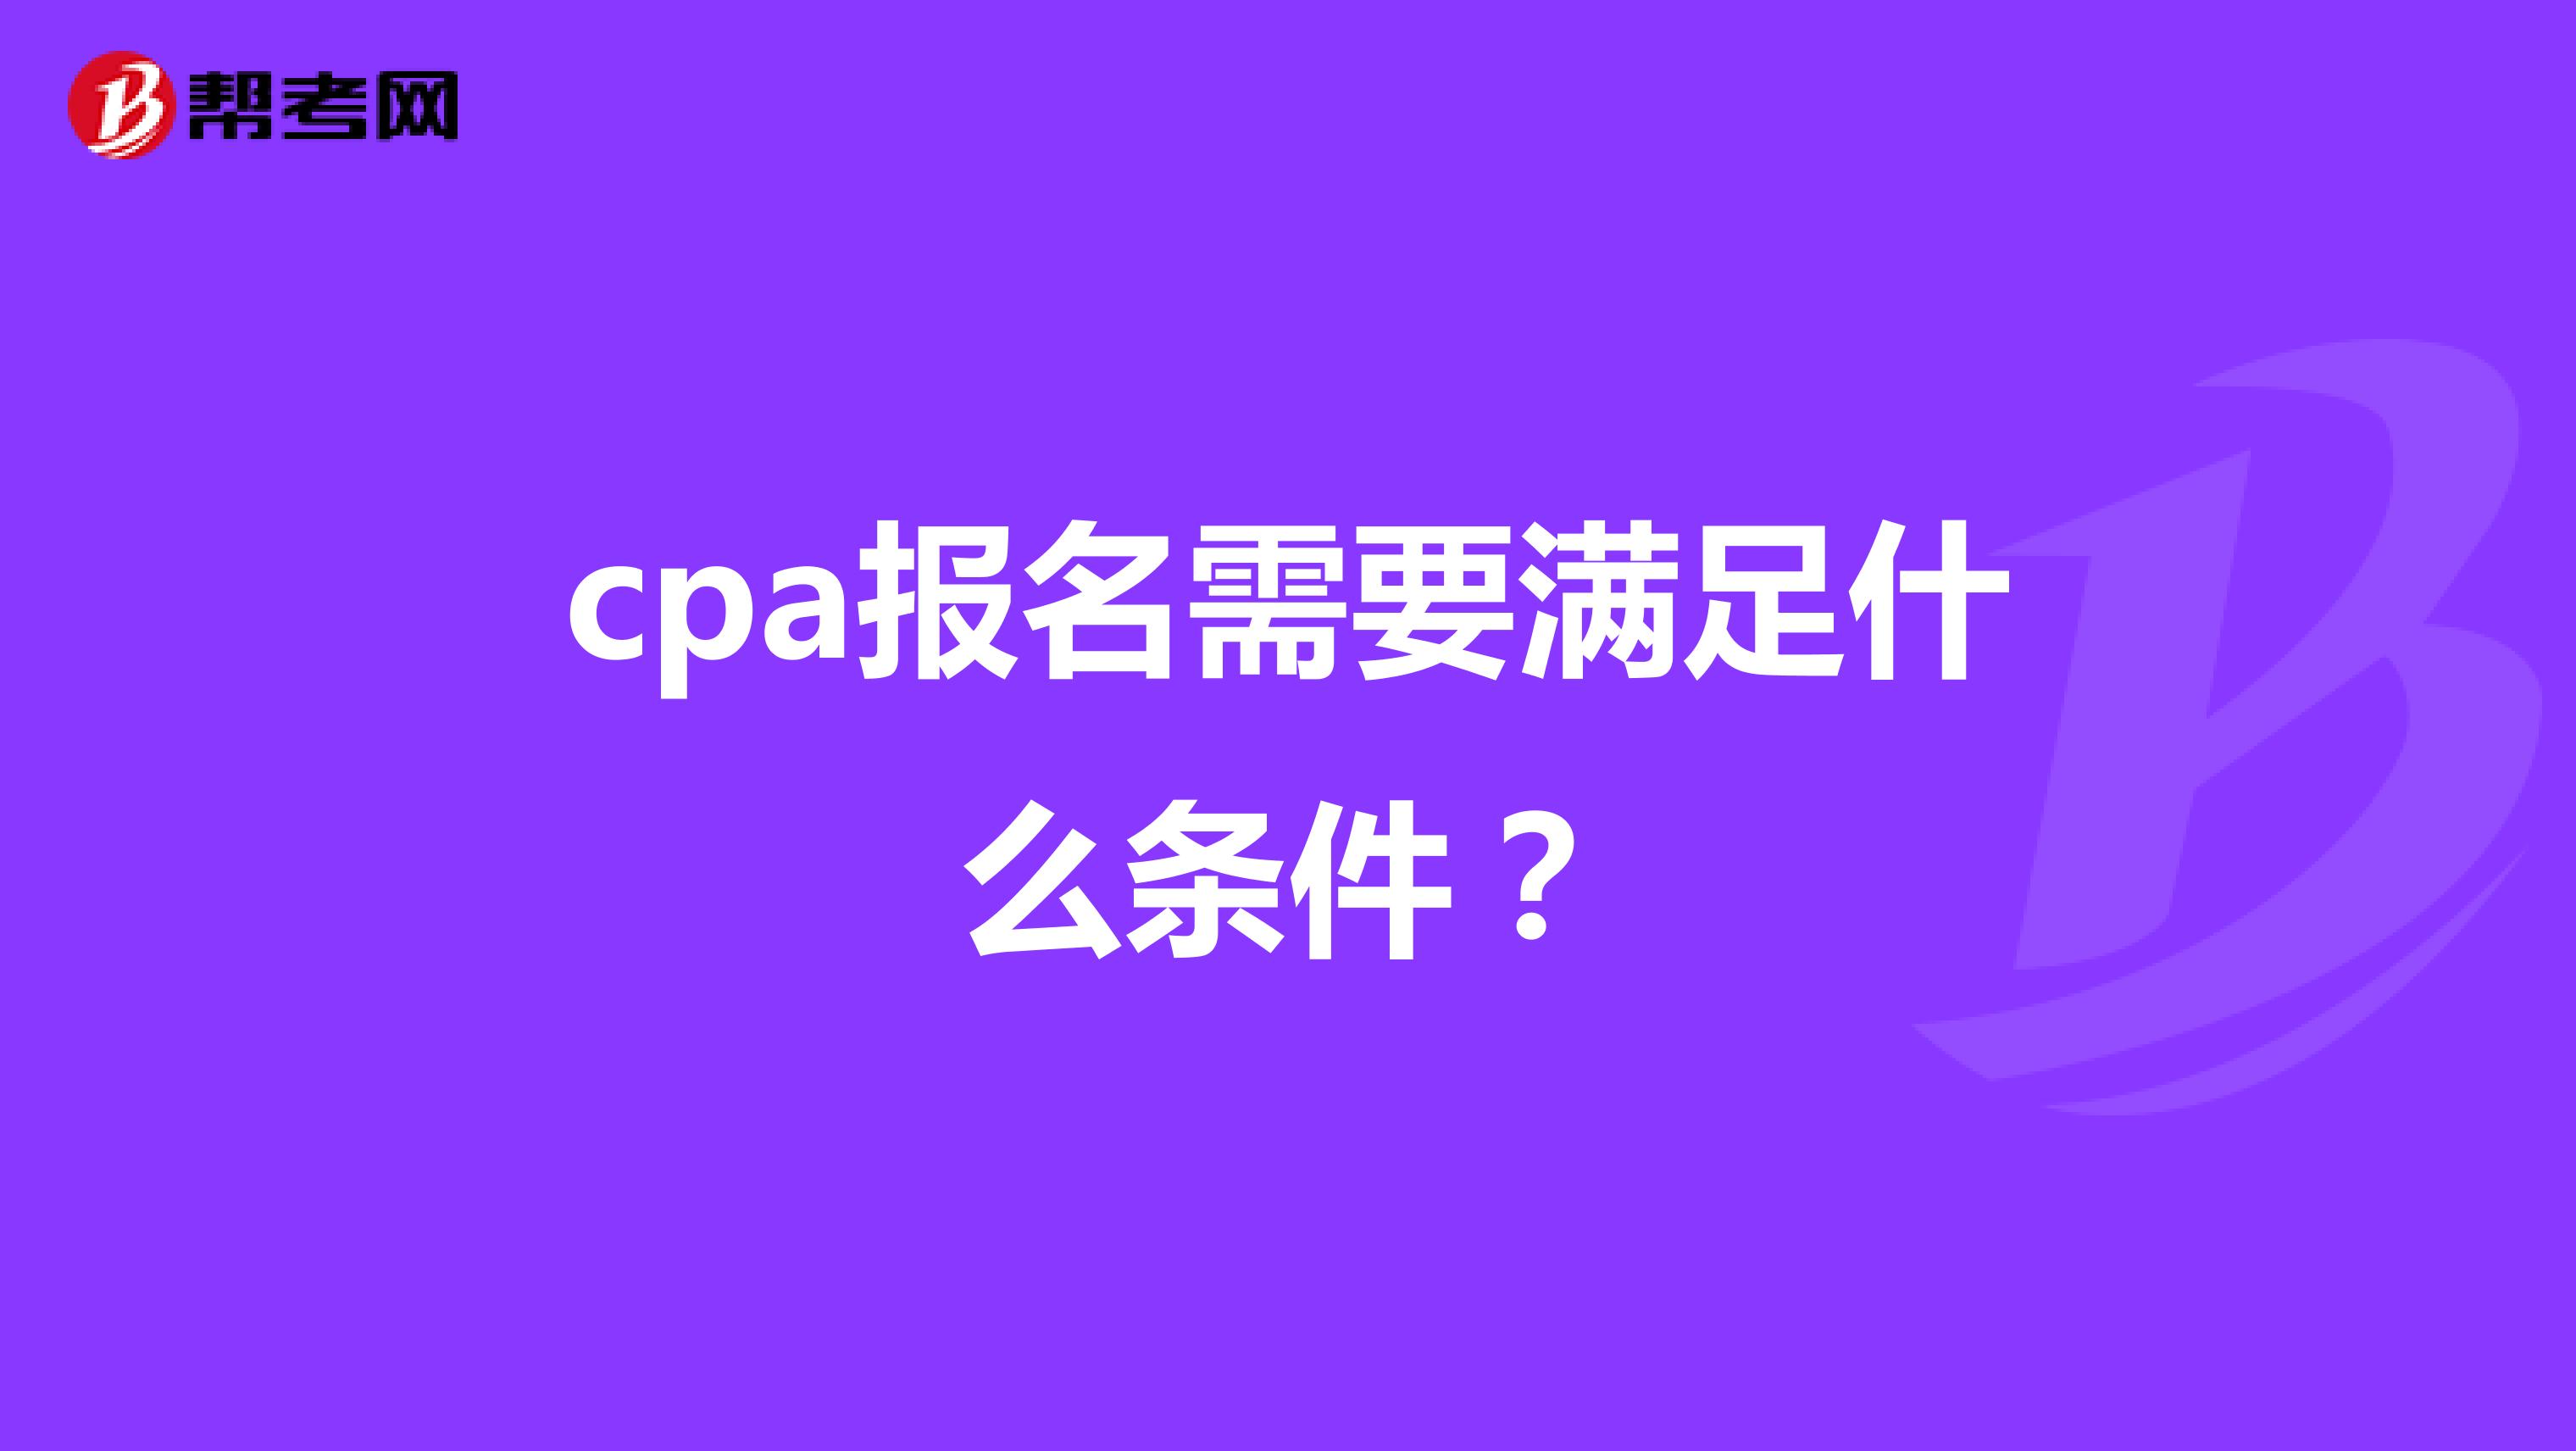 cpa报名需要满足什么条件？